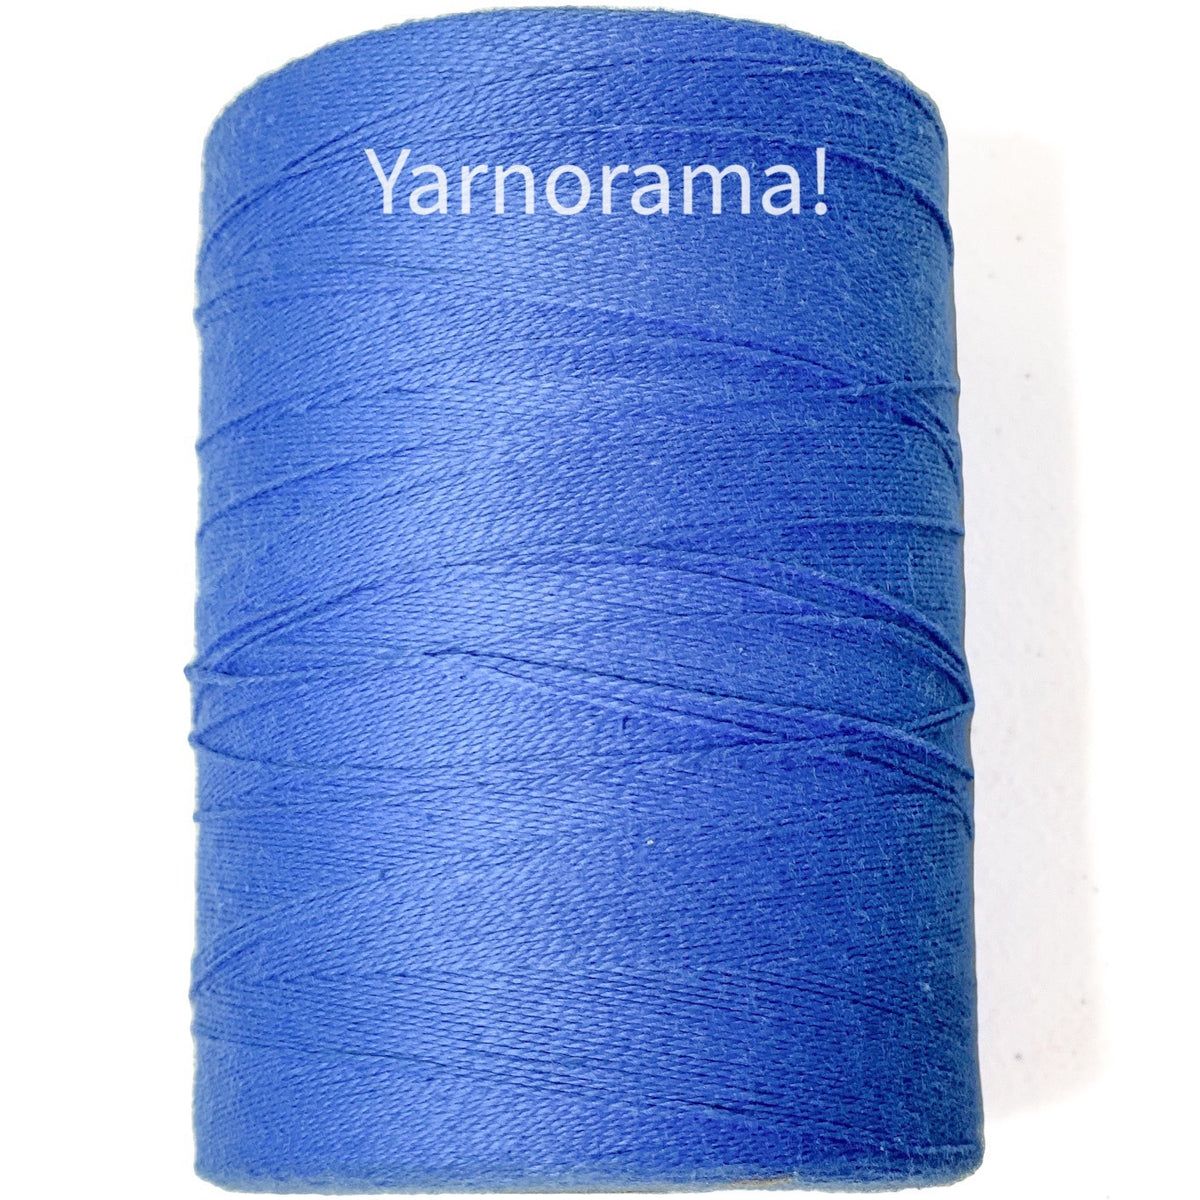 16/2 Unmercerized Cotton - Maurice Brassard-Weaving Yarn-Blue - 4272-Yarnorama